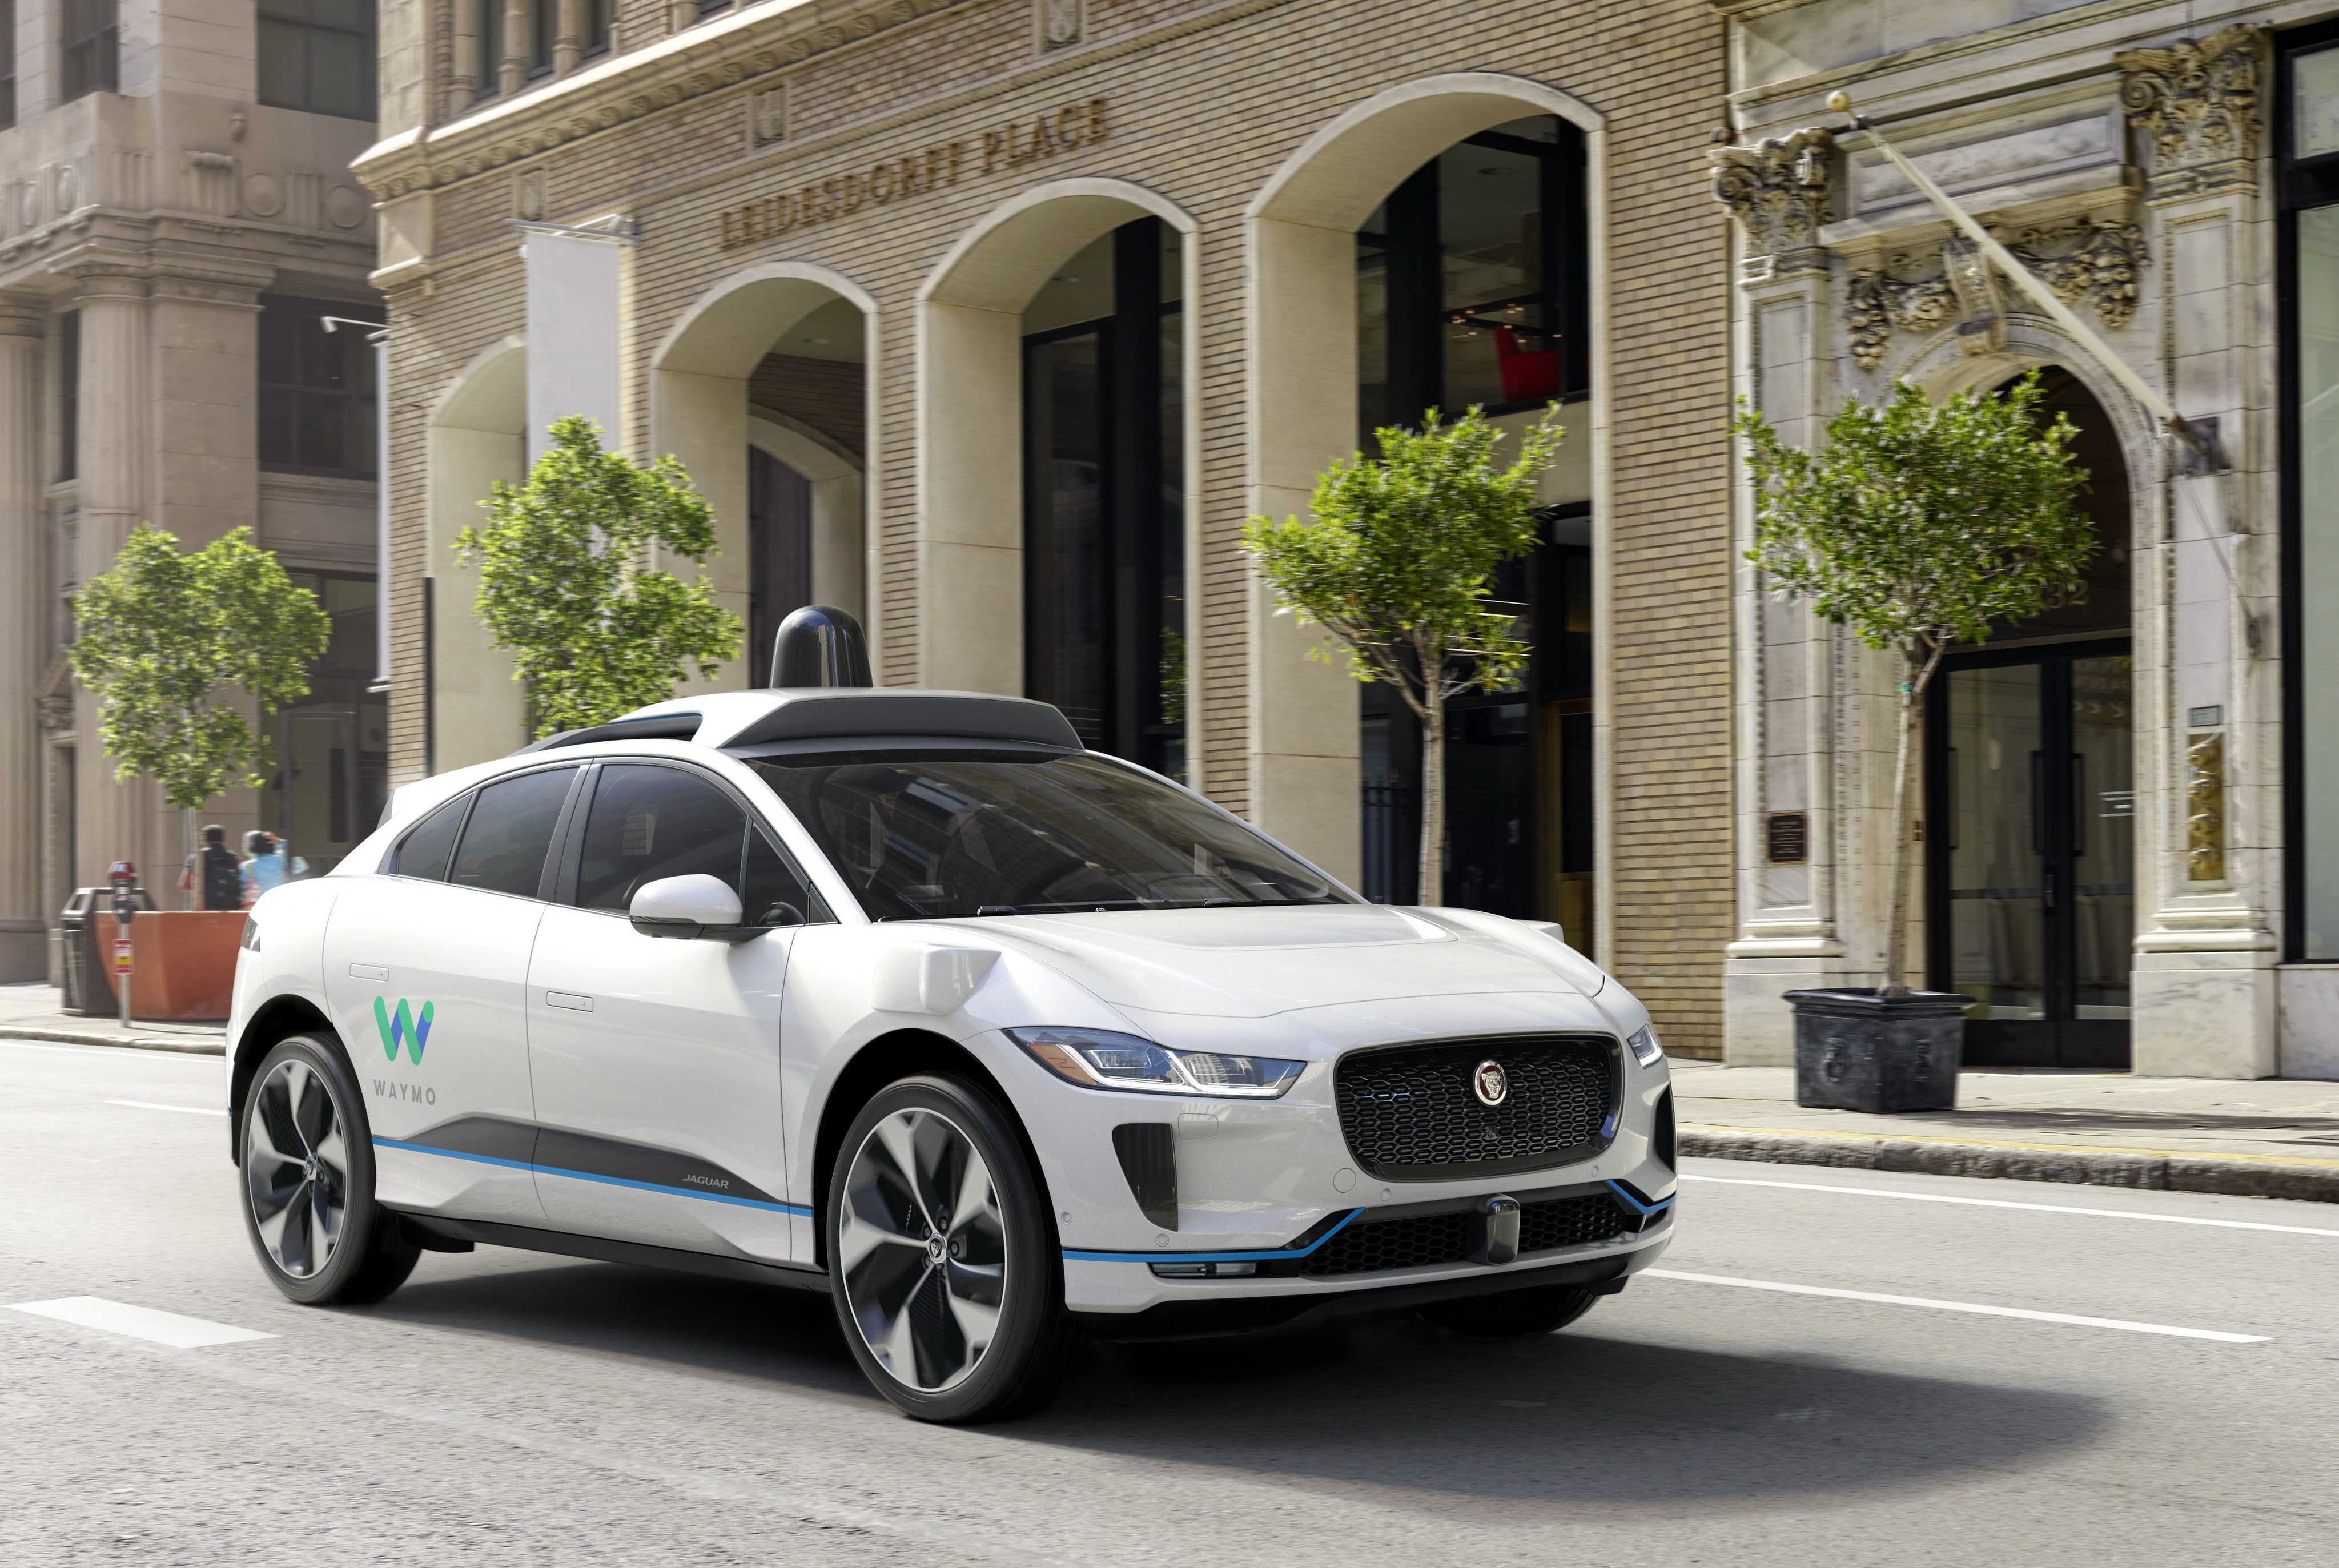 2018, ev400, i-pace, jaguar, self-driving, vehicle, waymo, car